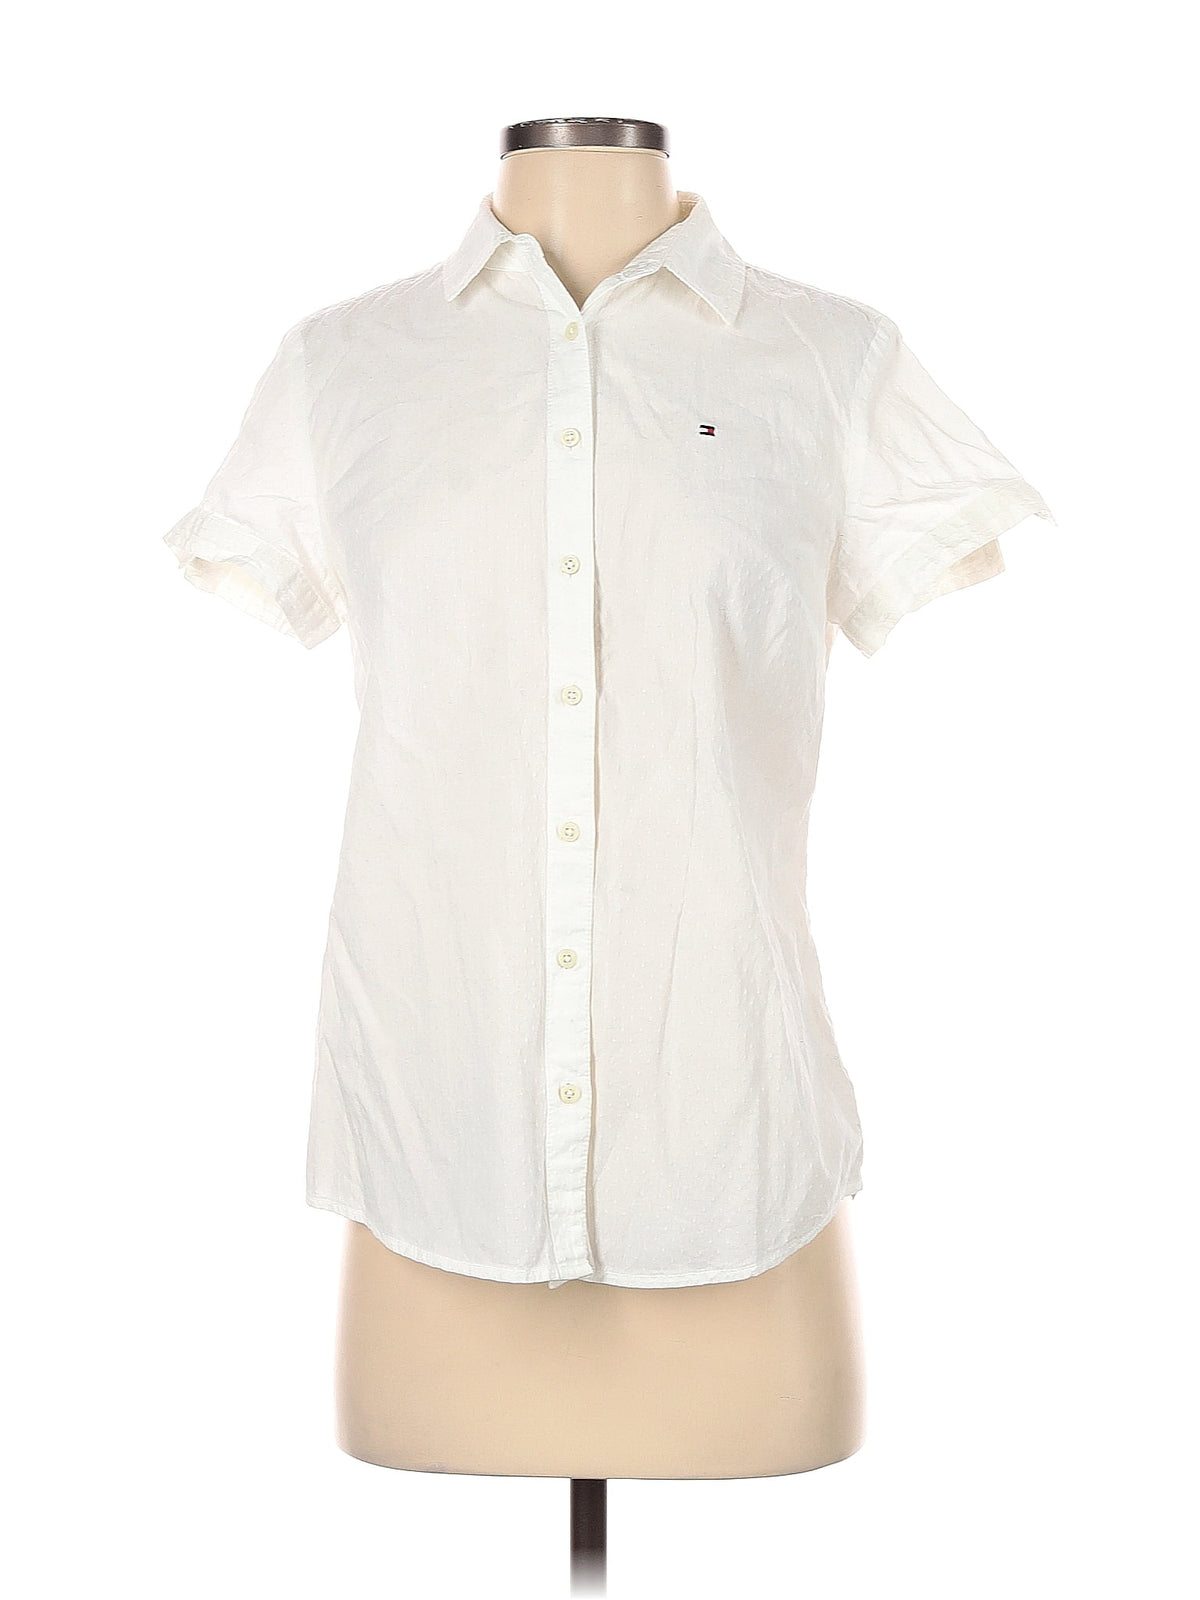 Short Sleeve Button Down Shirt size - S